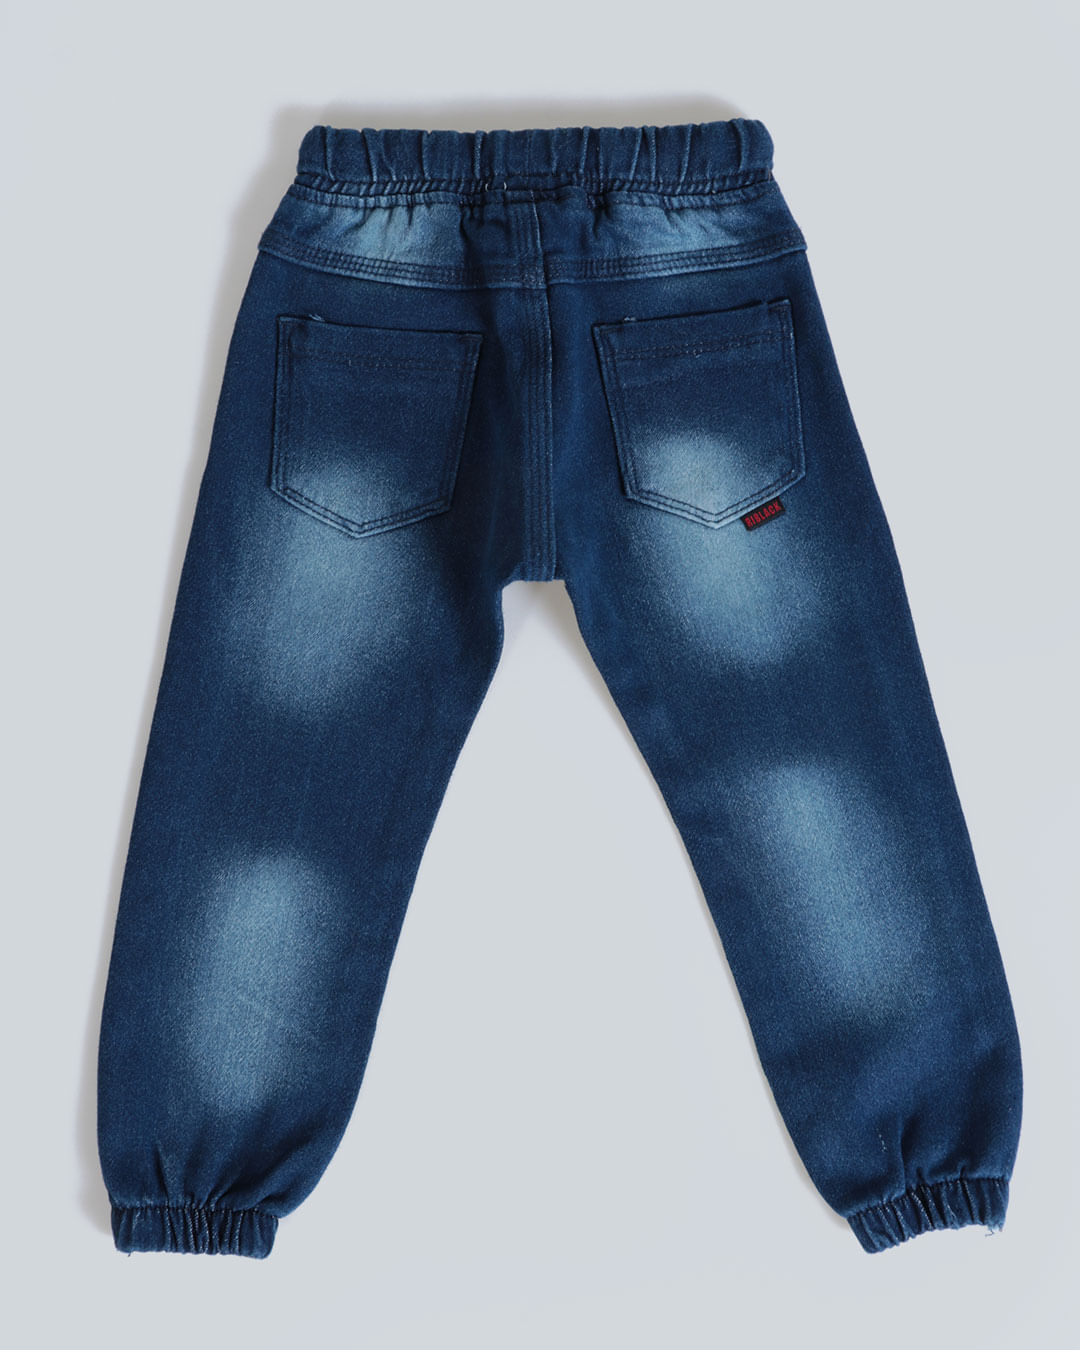 39521000078045-blue-jeans-medio-2